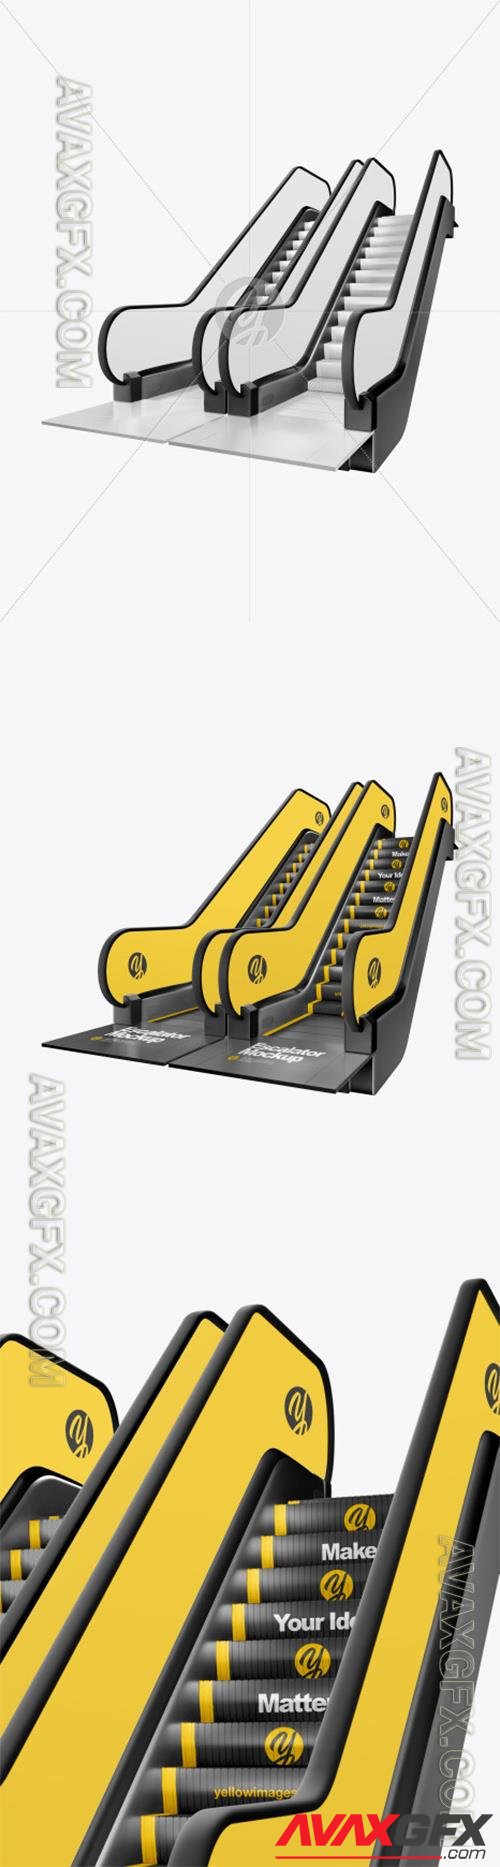 Double Escalator Mockup 88035 TIF